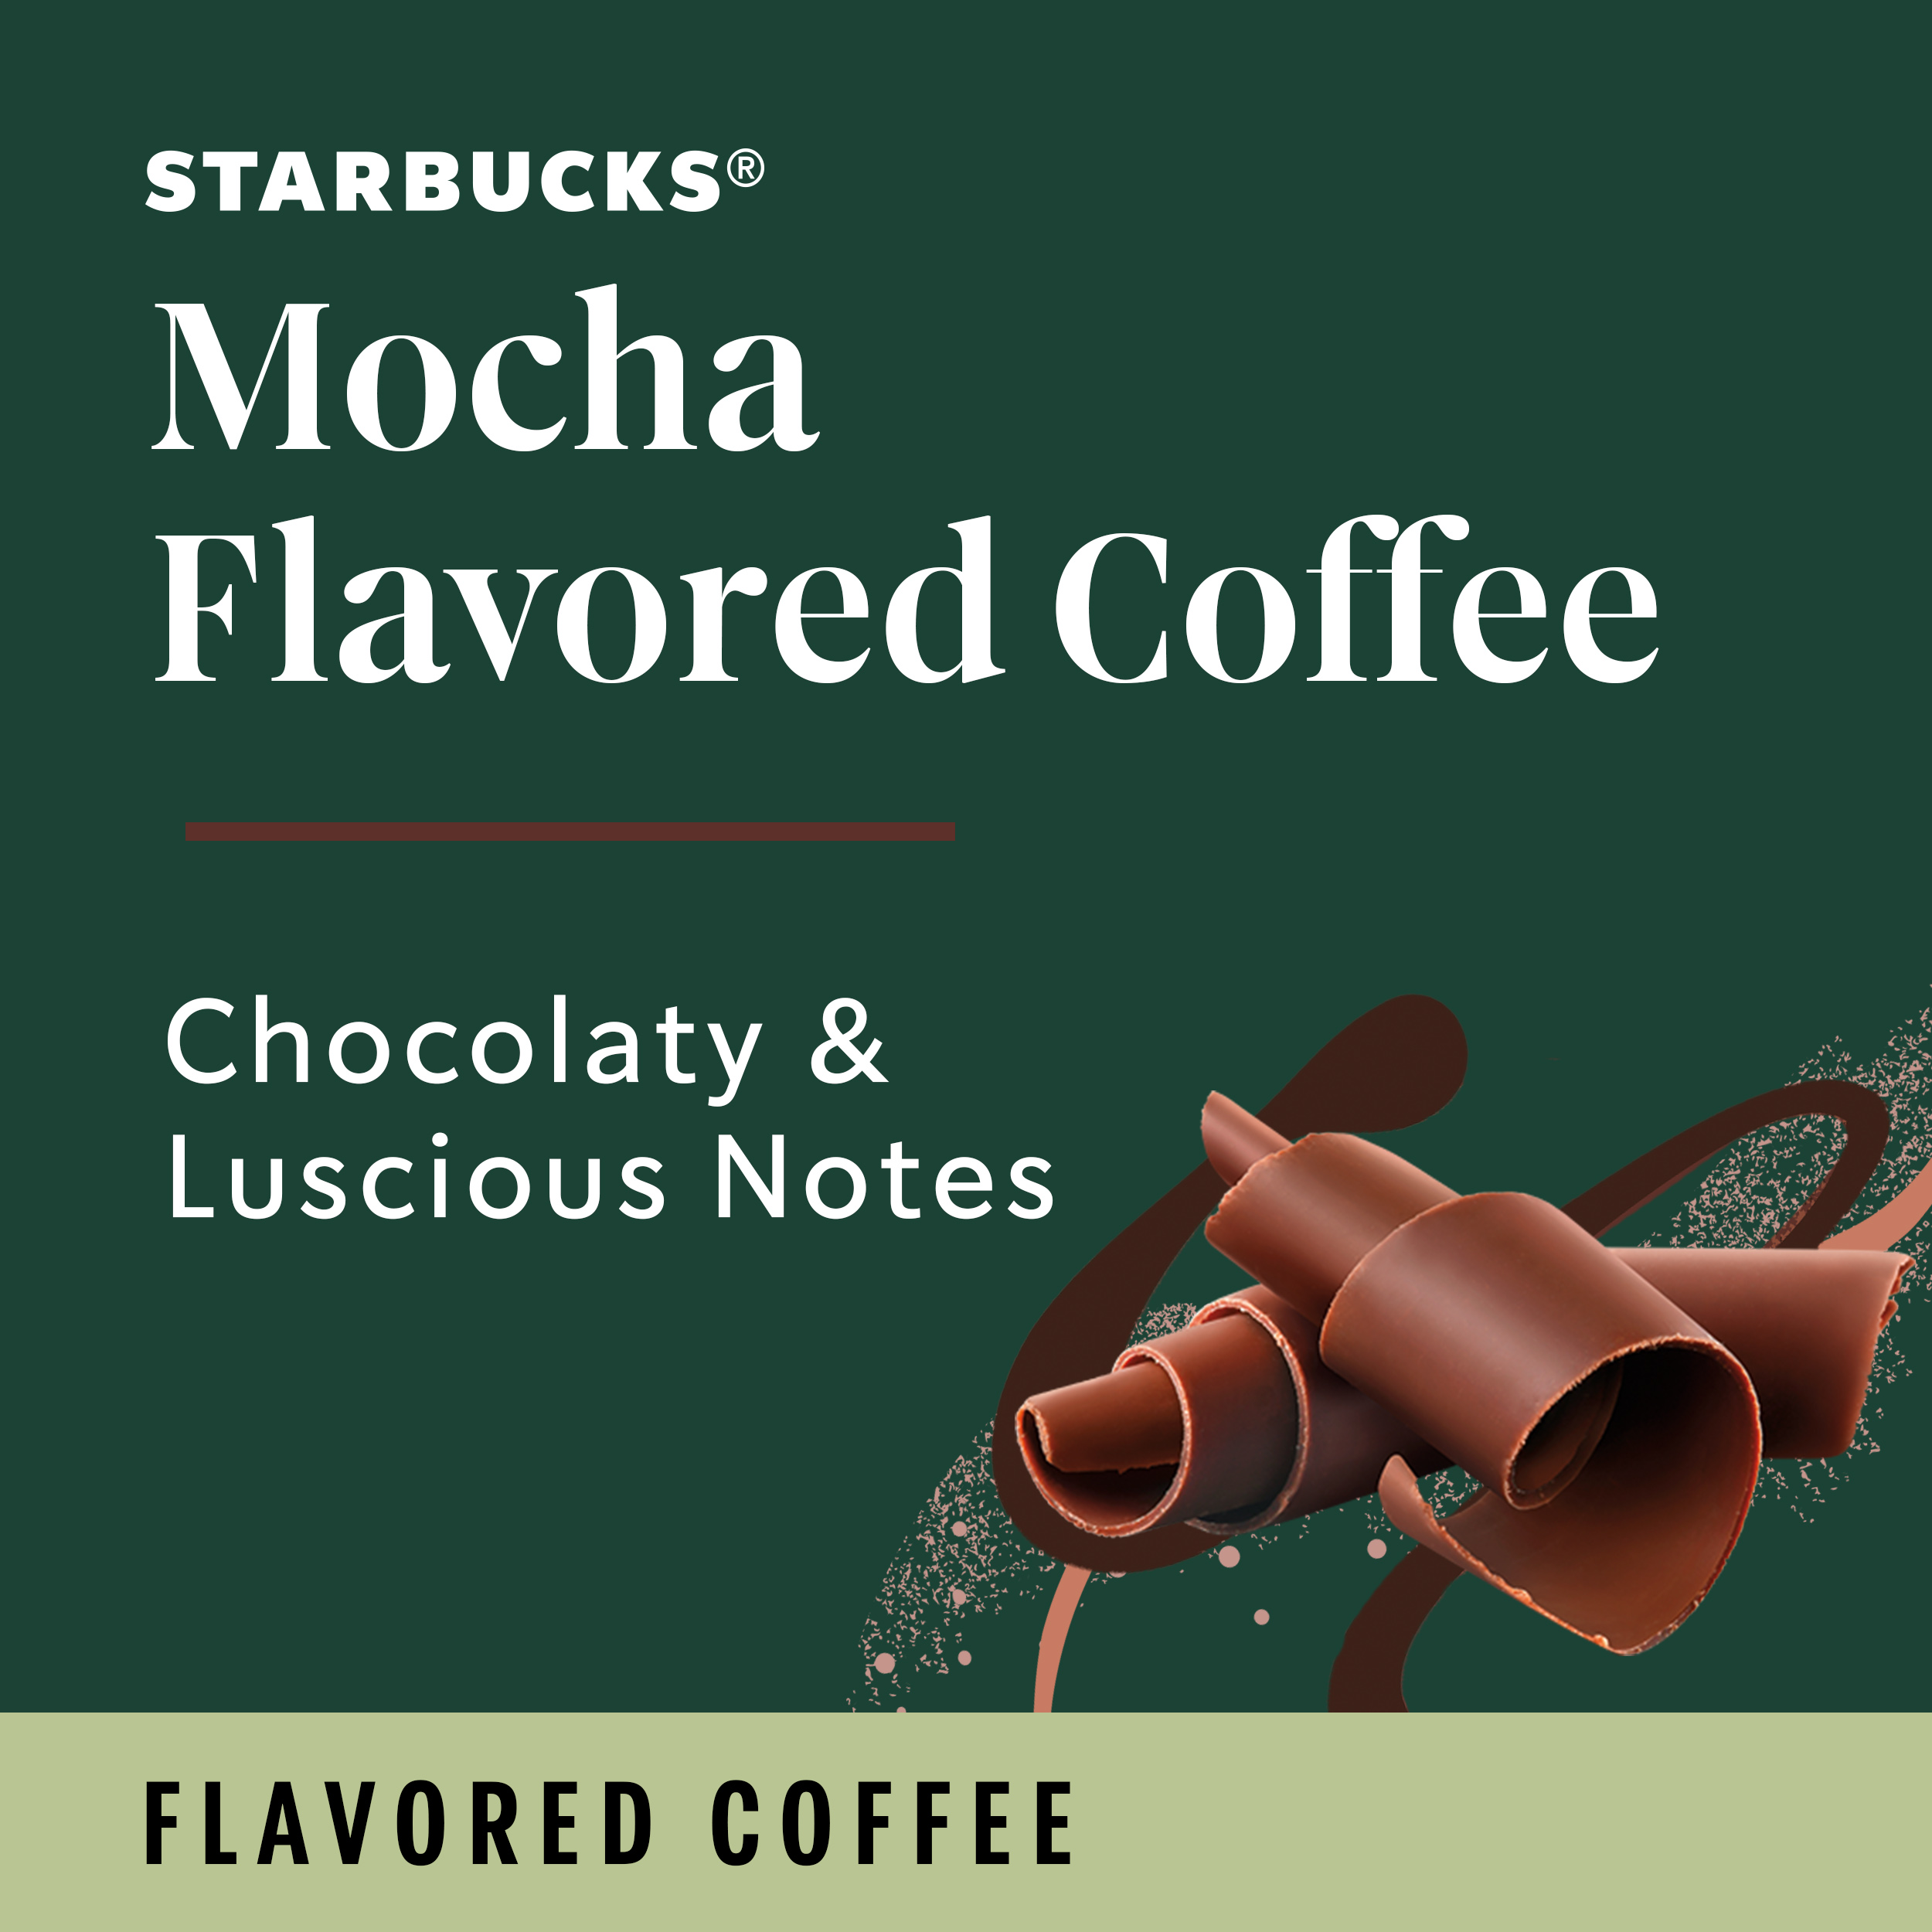 Starbucks Arabica Beans Mocha, Ground Coffee, 11 oz - image 3 of 8